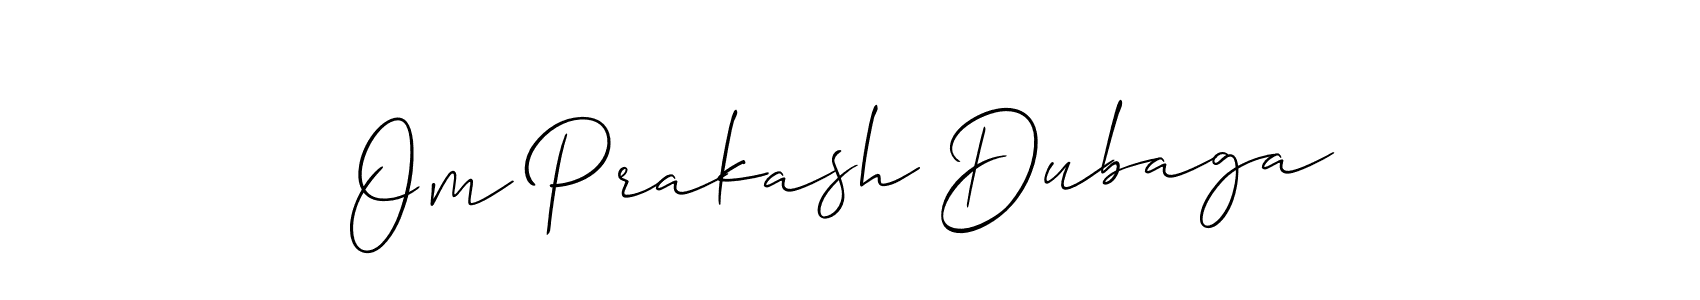 How to make Om Prakash Dubaga signature? Allison_Script is a professional autograph style. Create handwritten signature for Om Prakash Dubaga name. Om Prakash Dubaga signature style 2 images and pictures png